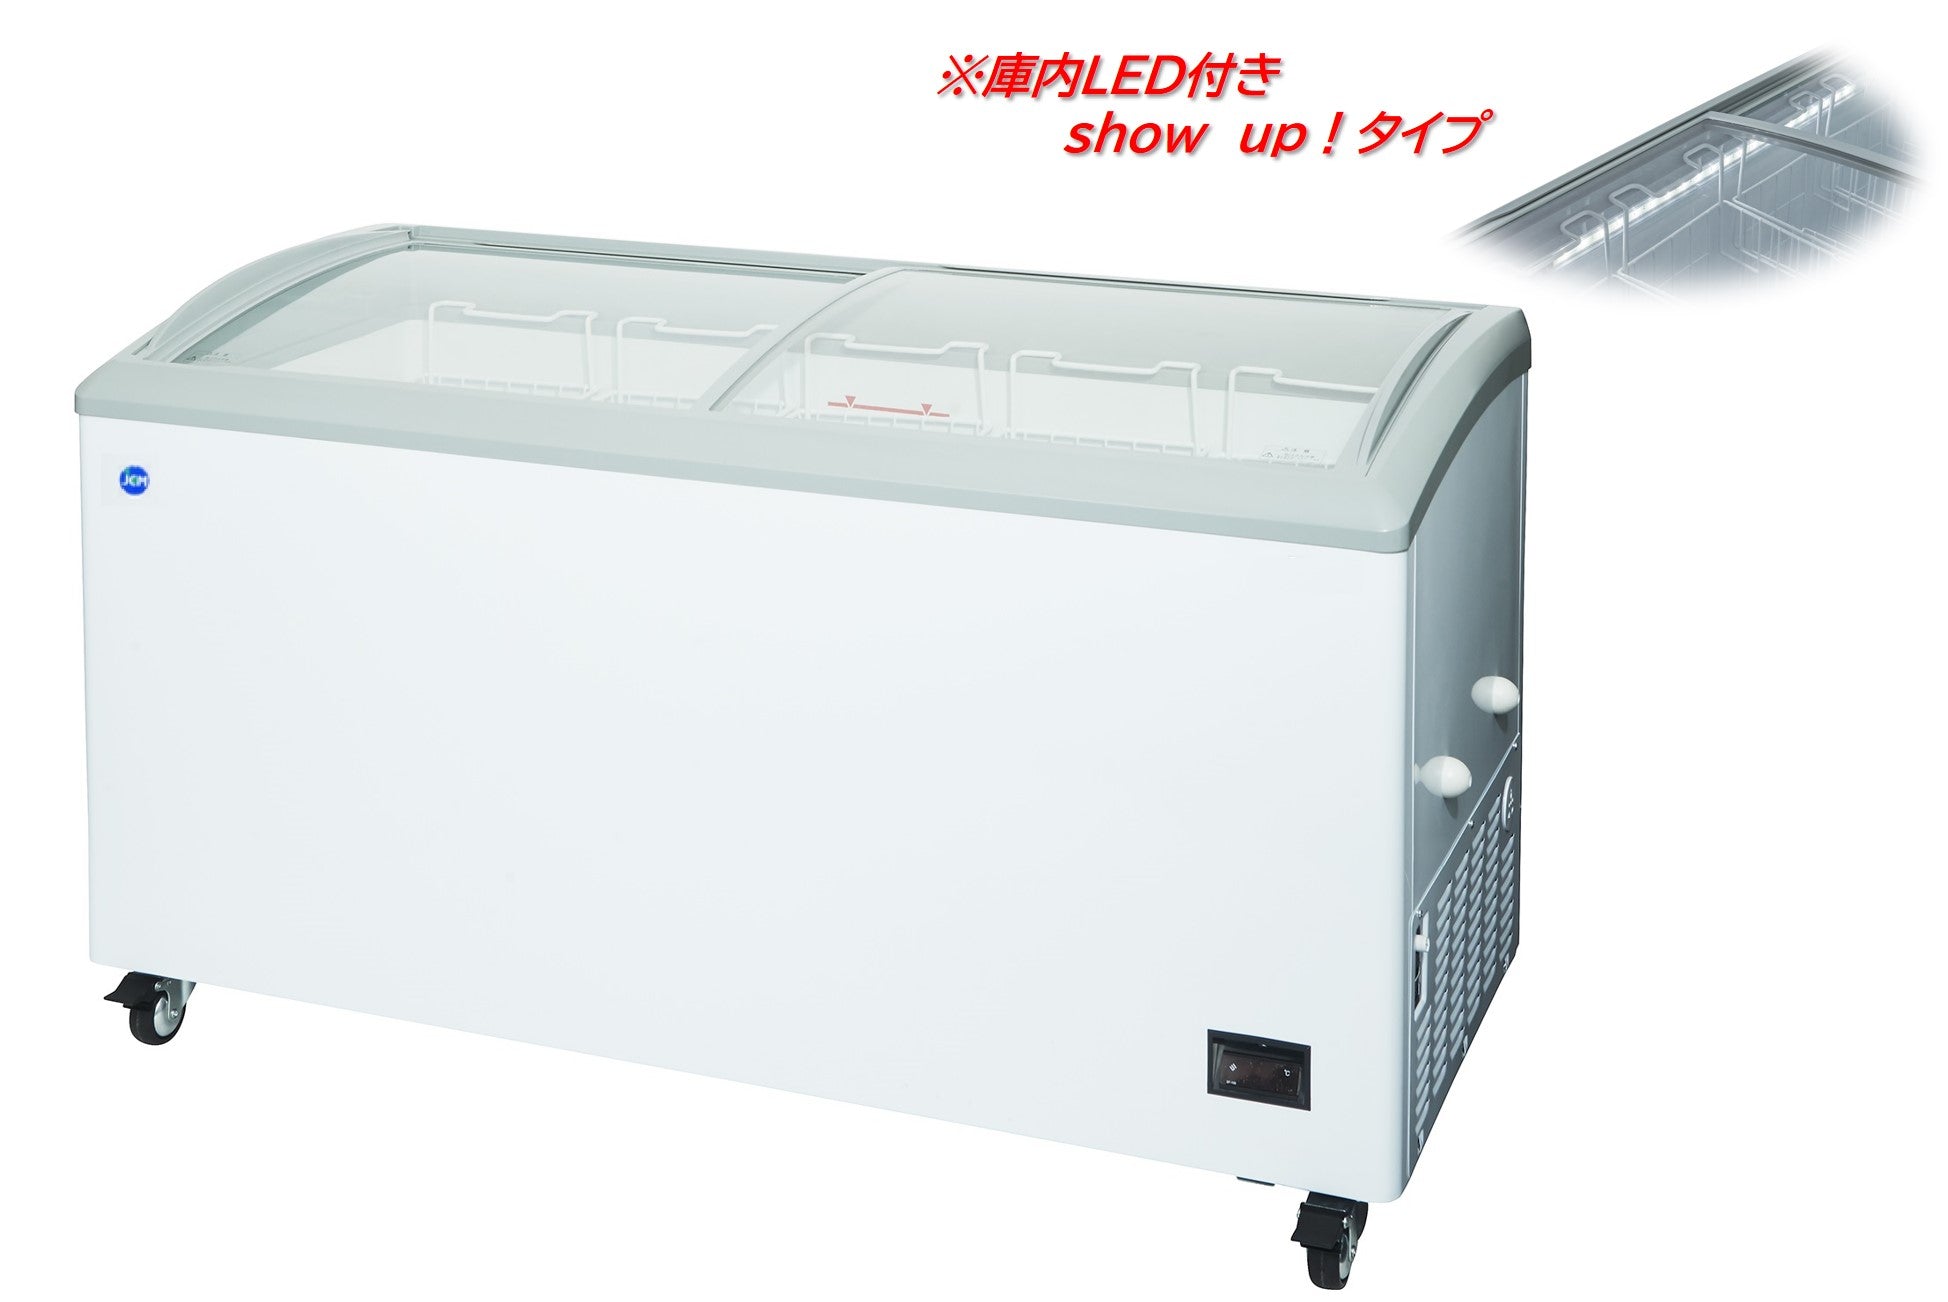 JCMCS-330L 冷凍ショーケース 庫内LED付タイプ／幅1511×奥行694×